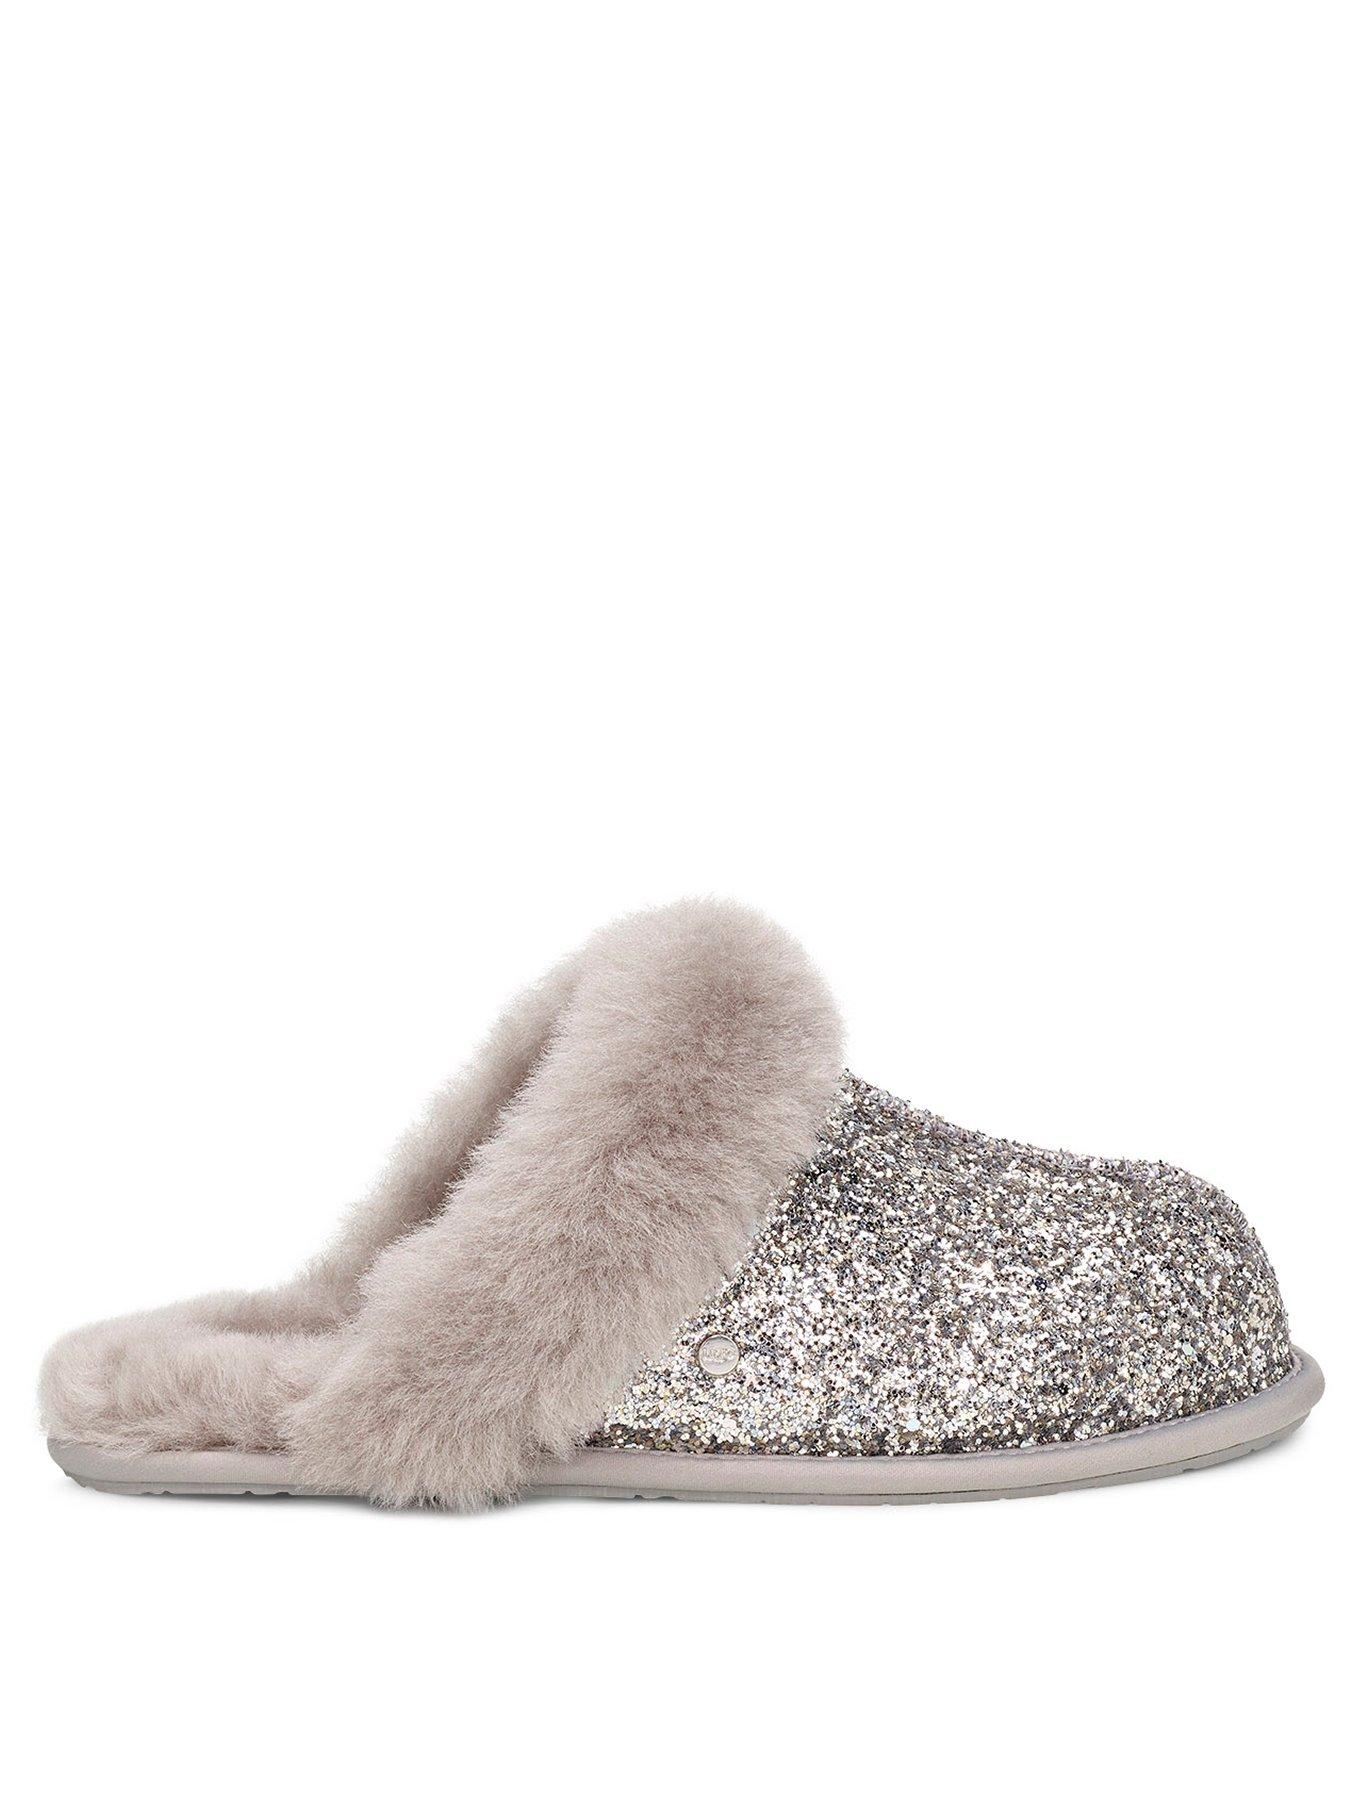 grey glitter ugg slippers